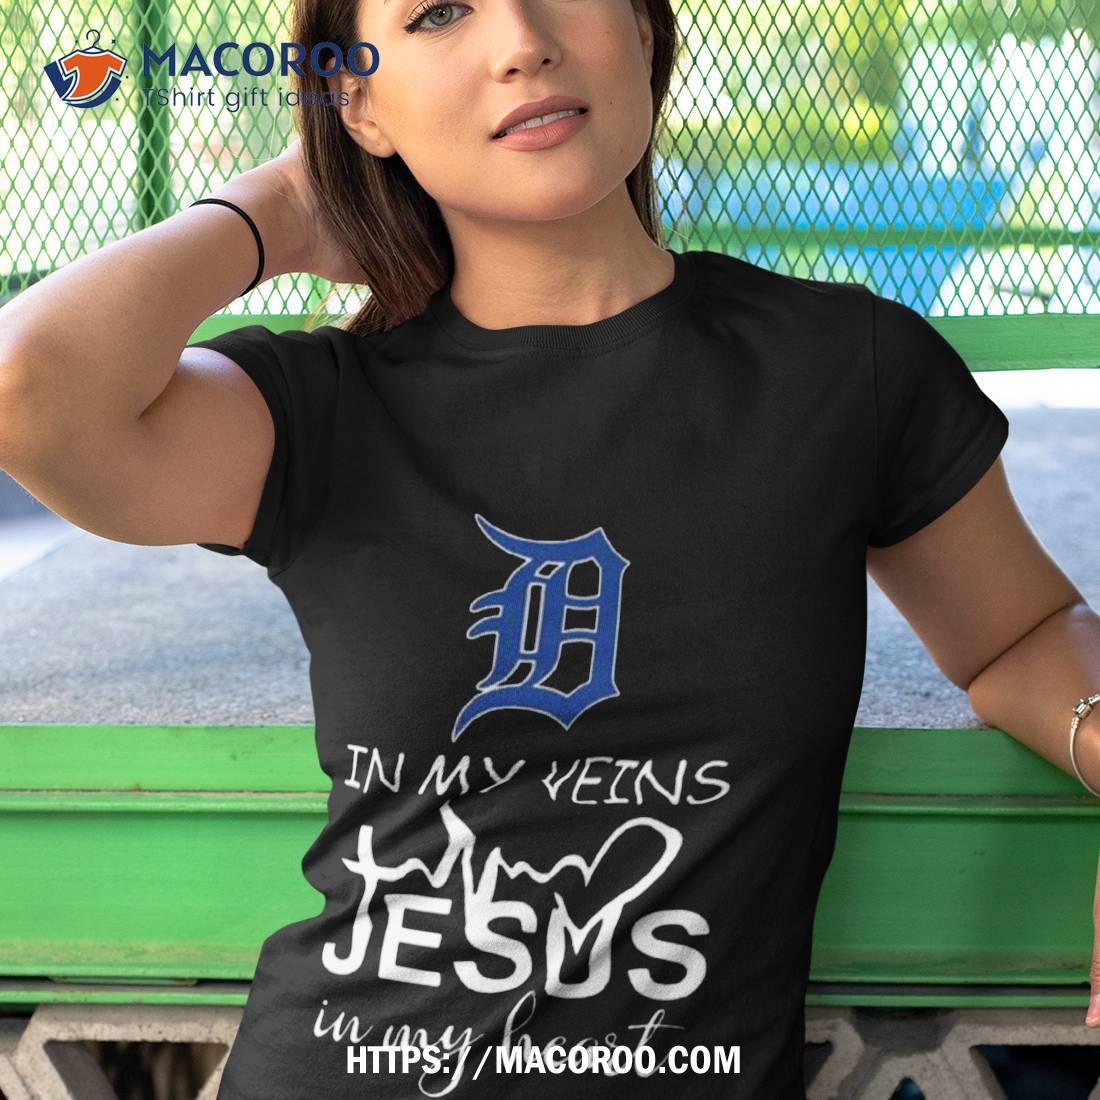 Detroit Tigers Womens Bold Statement Navy Scoop Neck T-Shirt